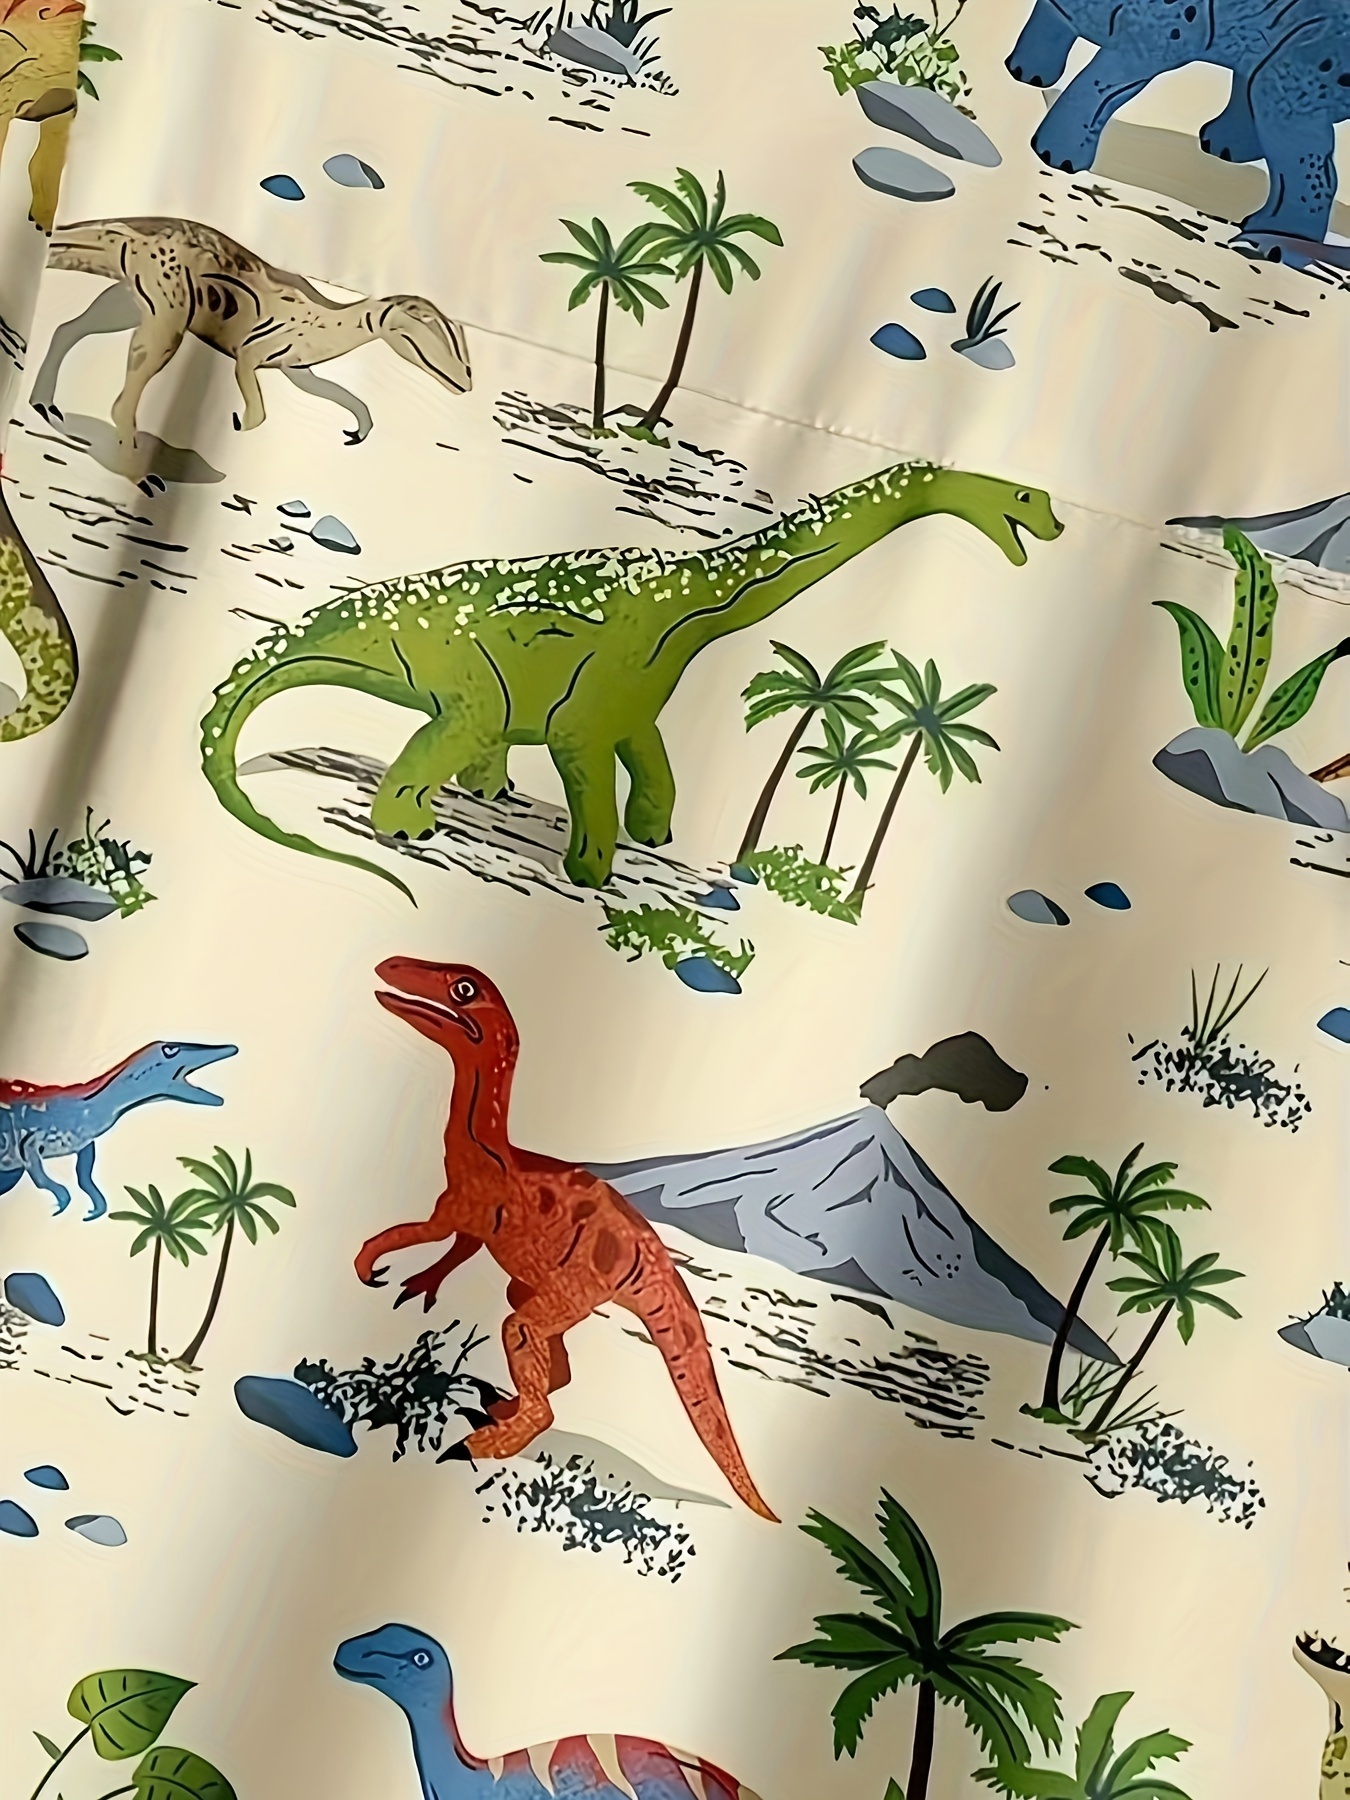 creative cartoon dinosaurs pattern mens chic short sleeve lapel shirt summer holiday top details 2